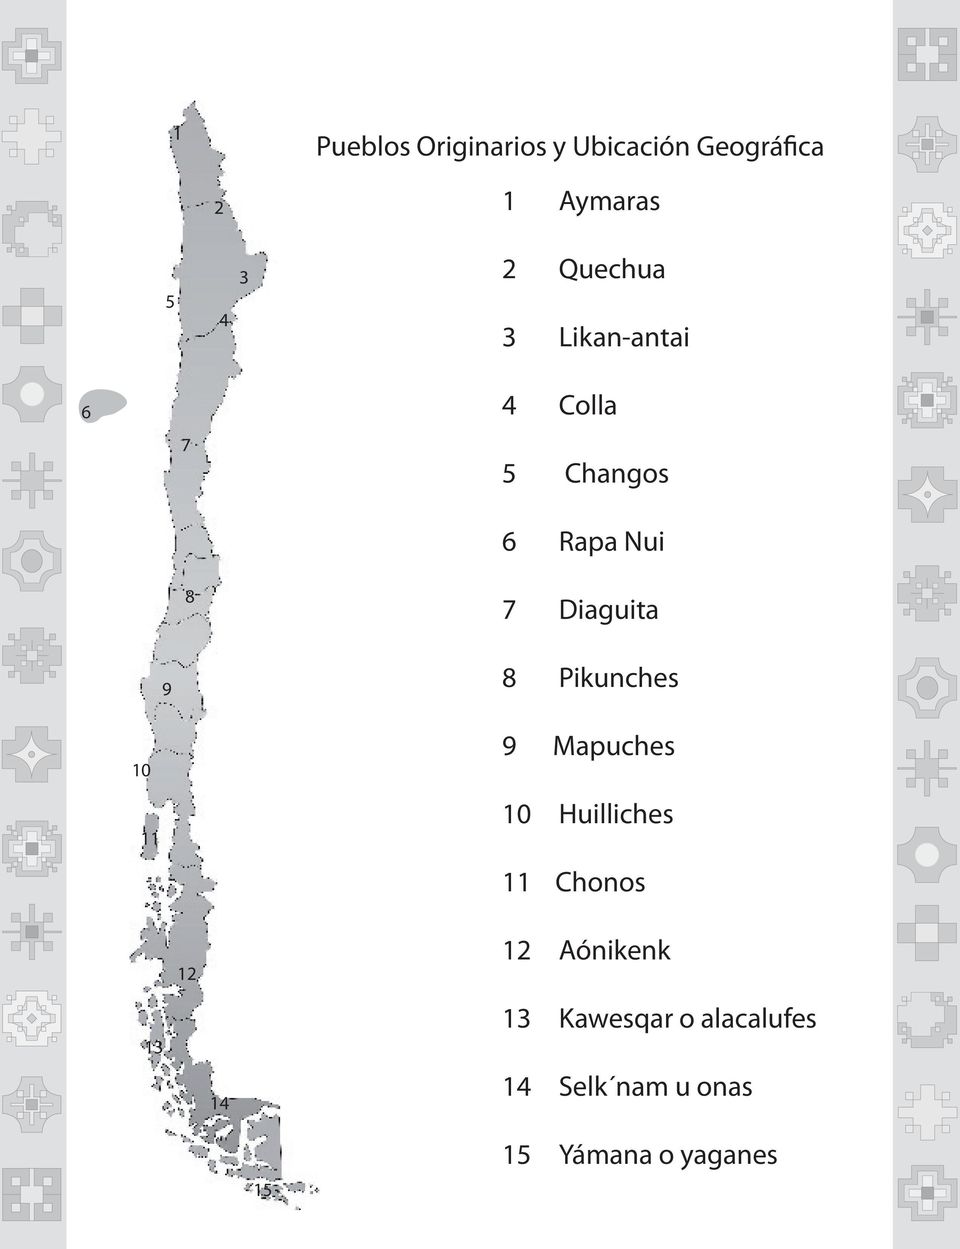 9 8 Pikunches 10 9 Mapuches 11 10 Huilliches 11 Chonos 12 12